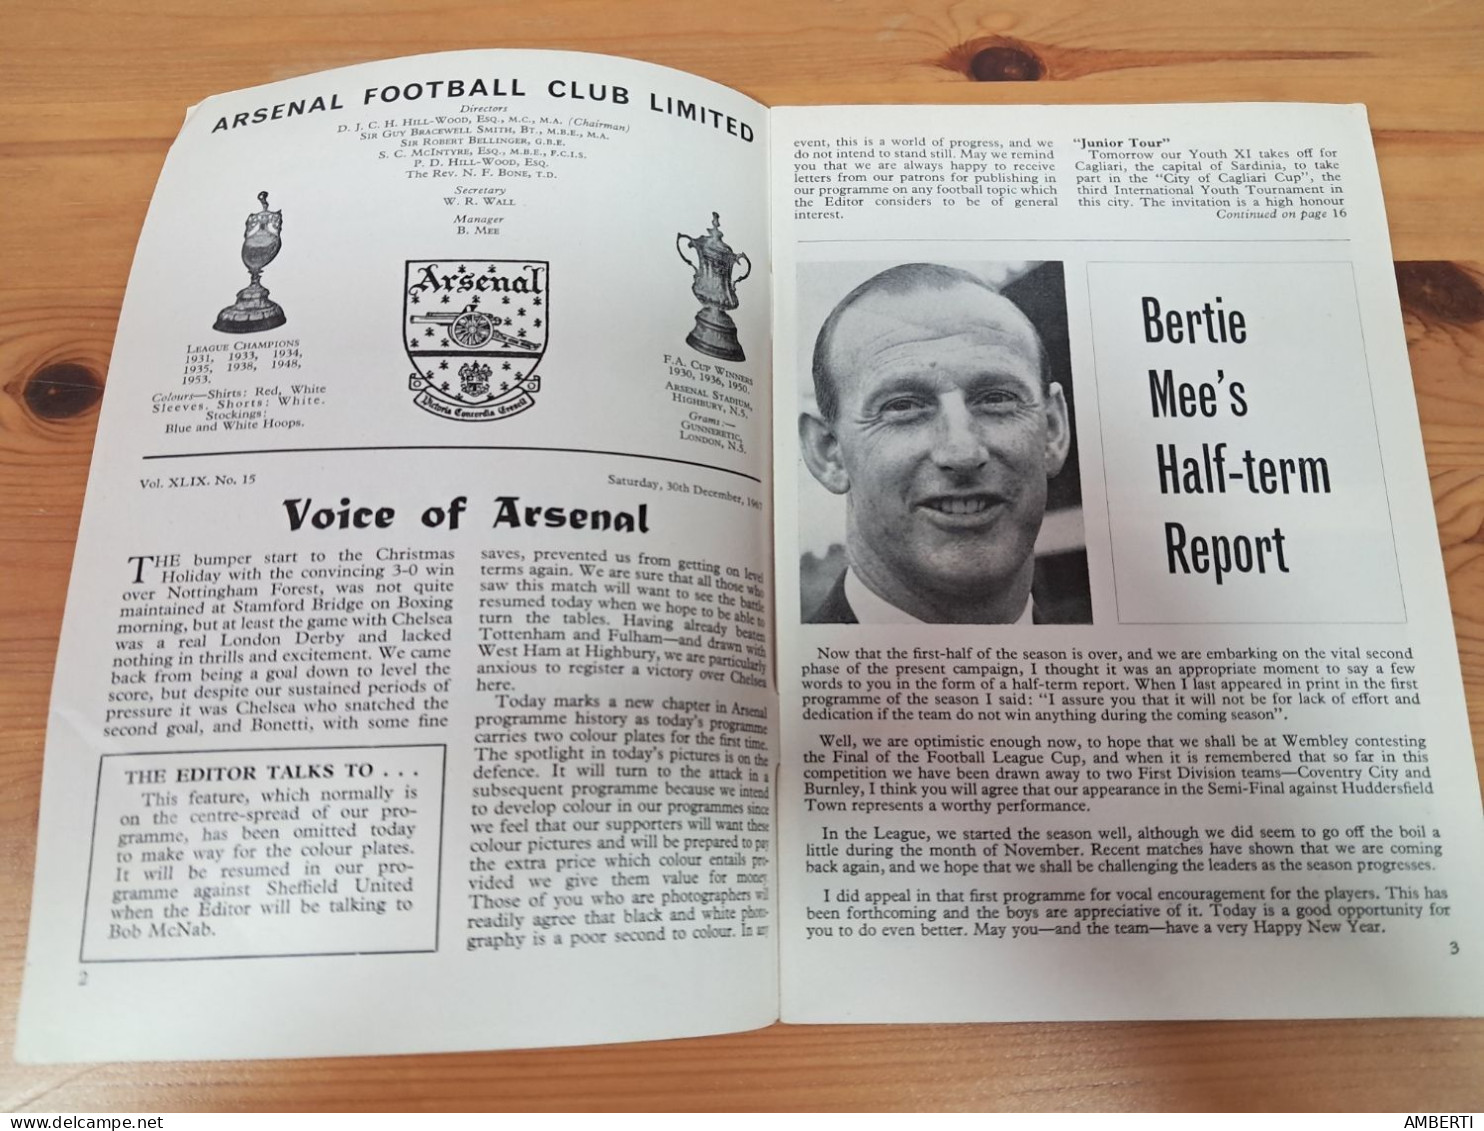 Programa Arsenal Chelsea Temporada 1967/68 - Deportes